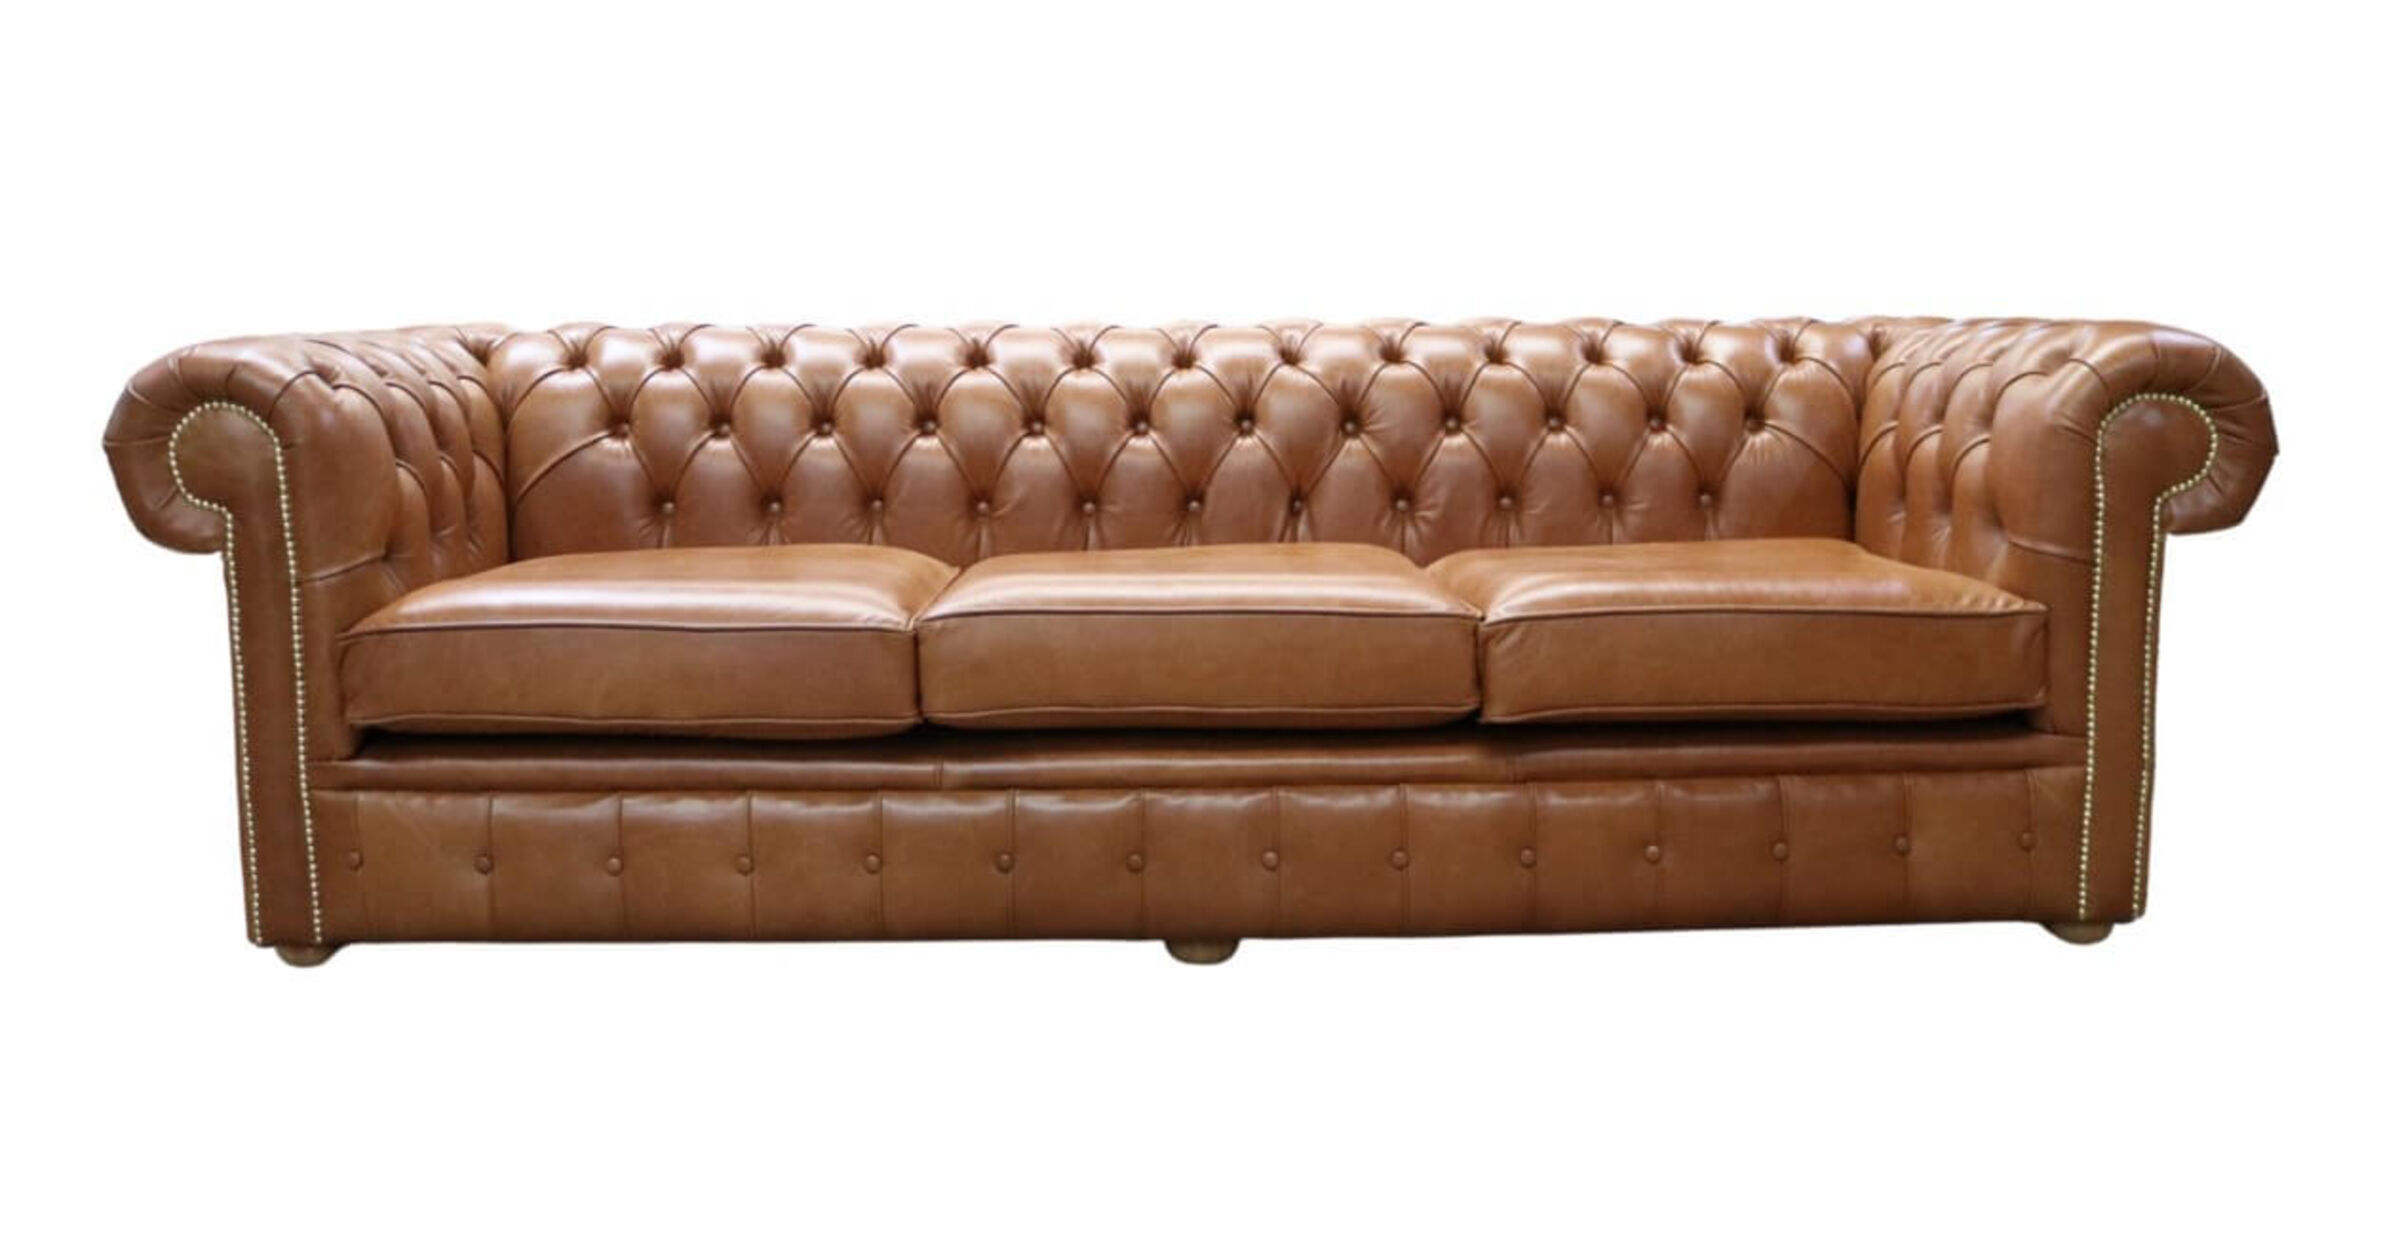 tan leather chesterfield sofa ireland